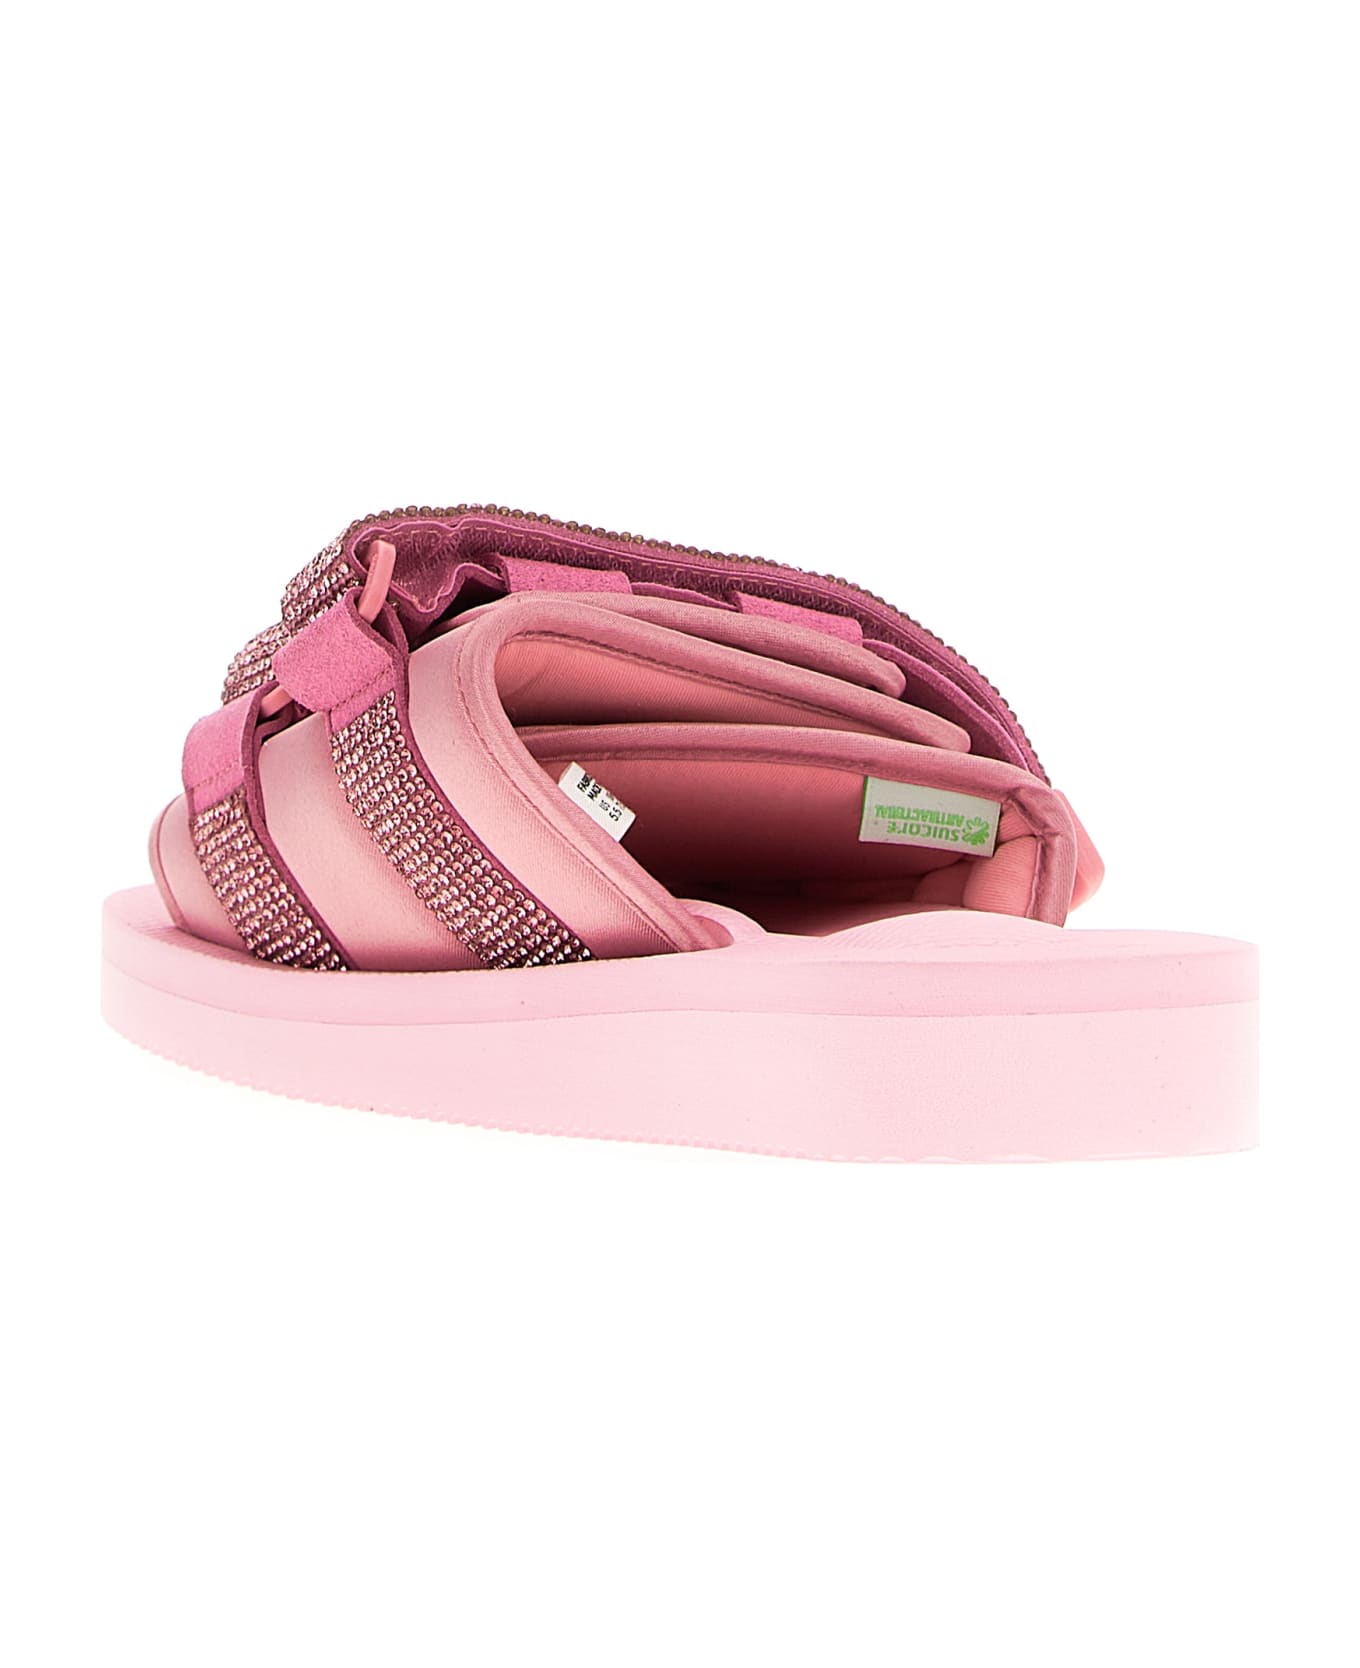 Blumarine X Suicoke 'moto' Sandals - Pink